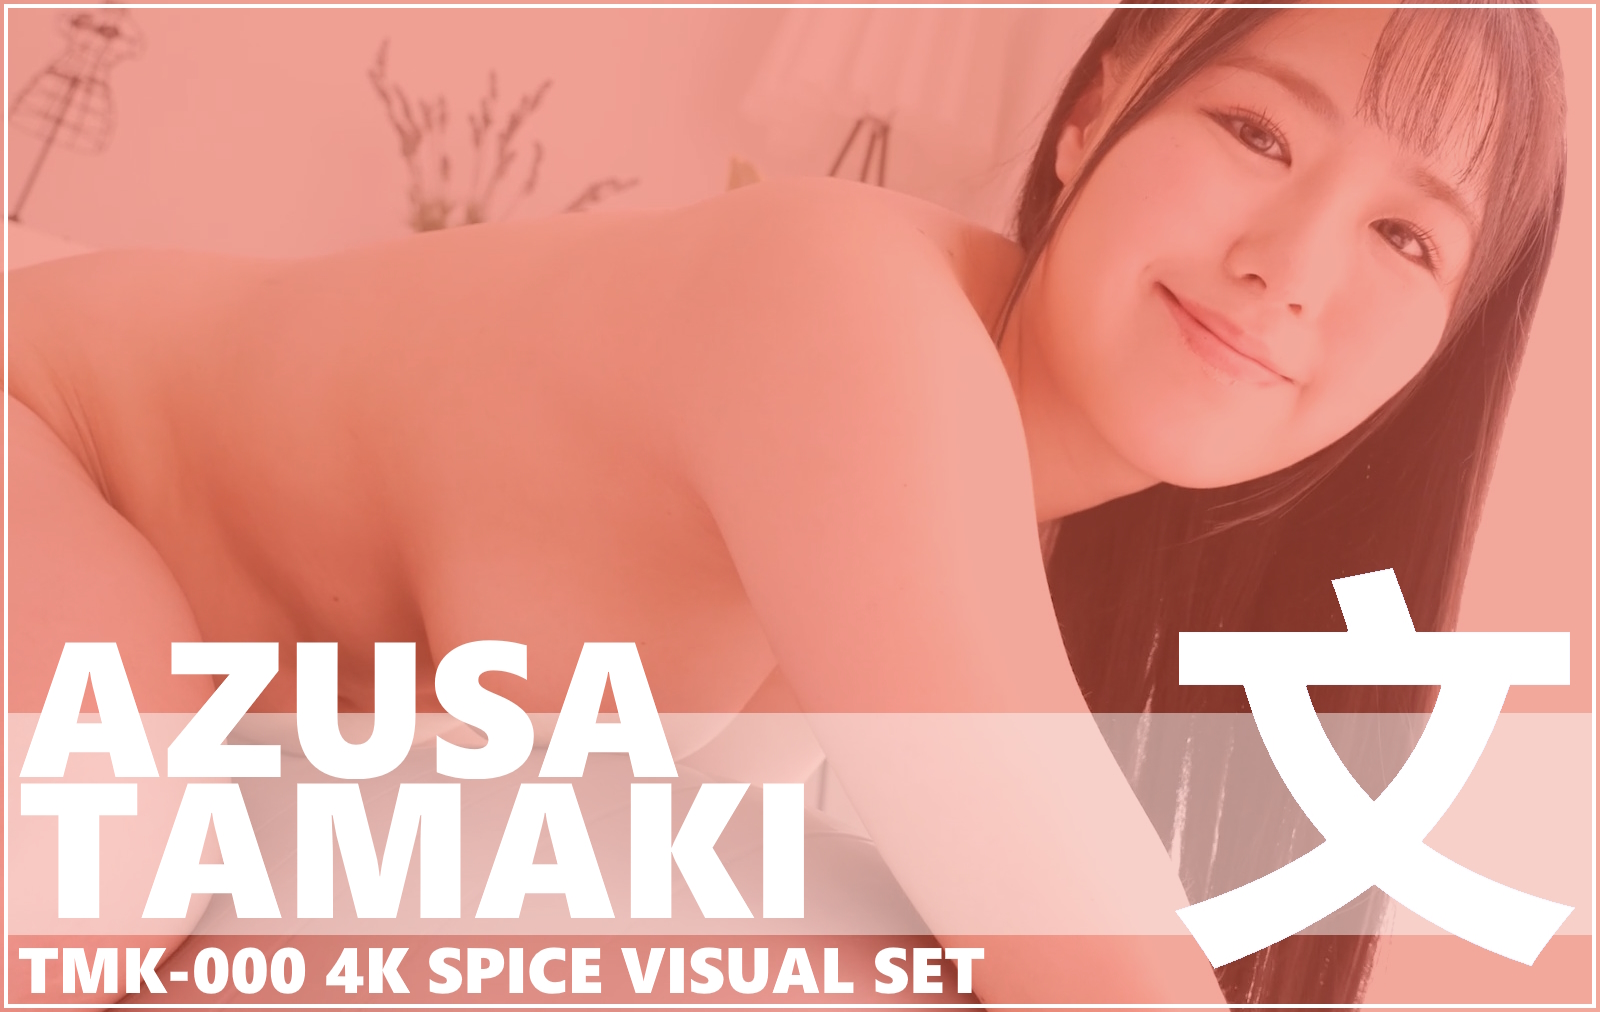 TMK-000 Azusa Tamaki 4K Spice Visual DVD Set